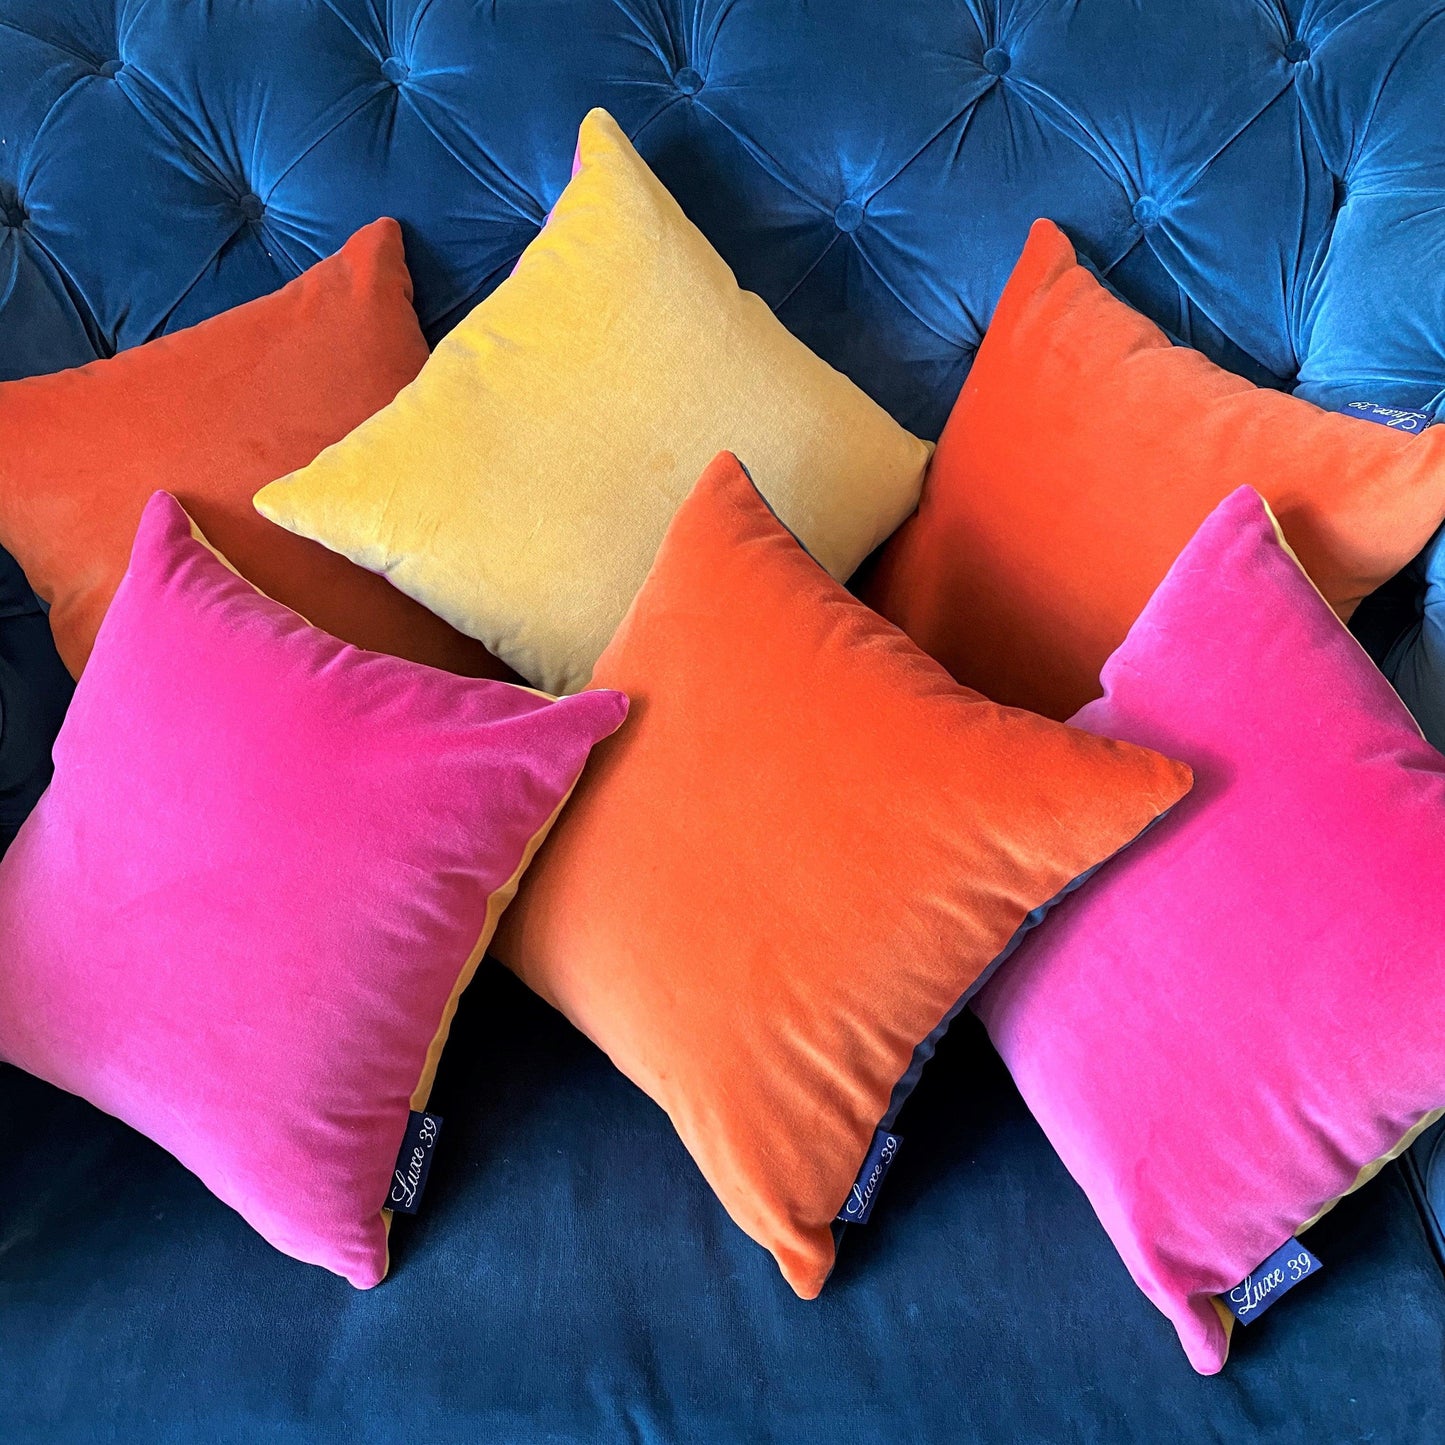 pink orange cushion luxe 39